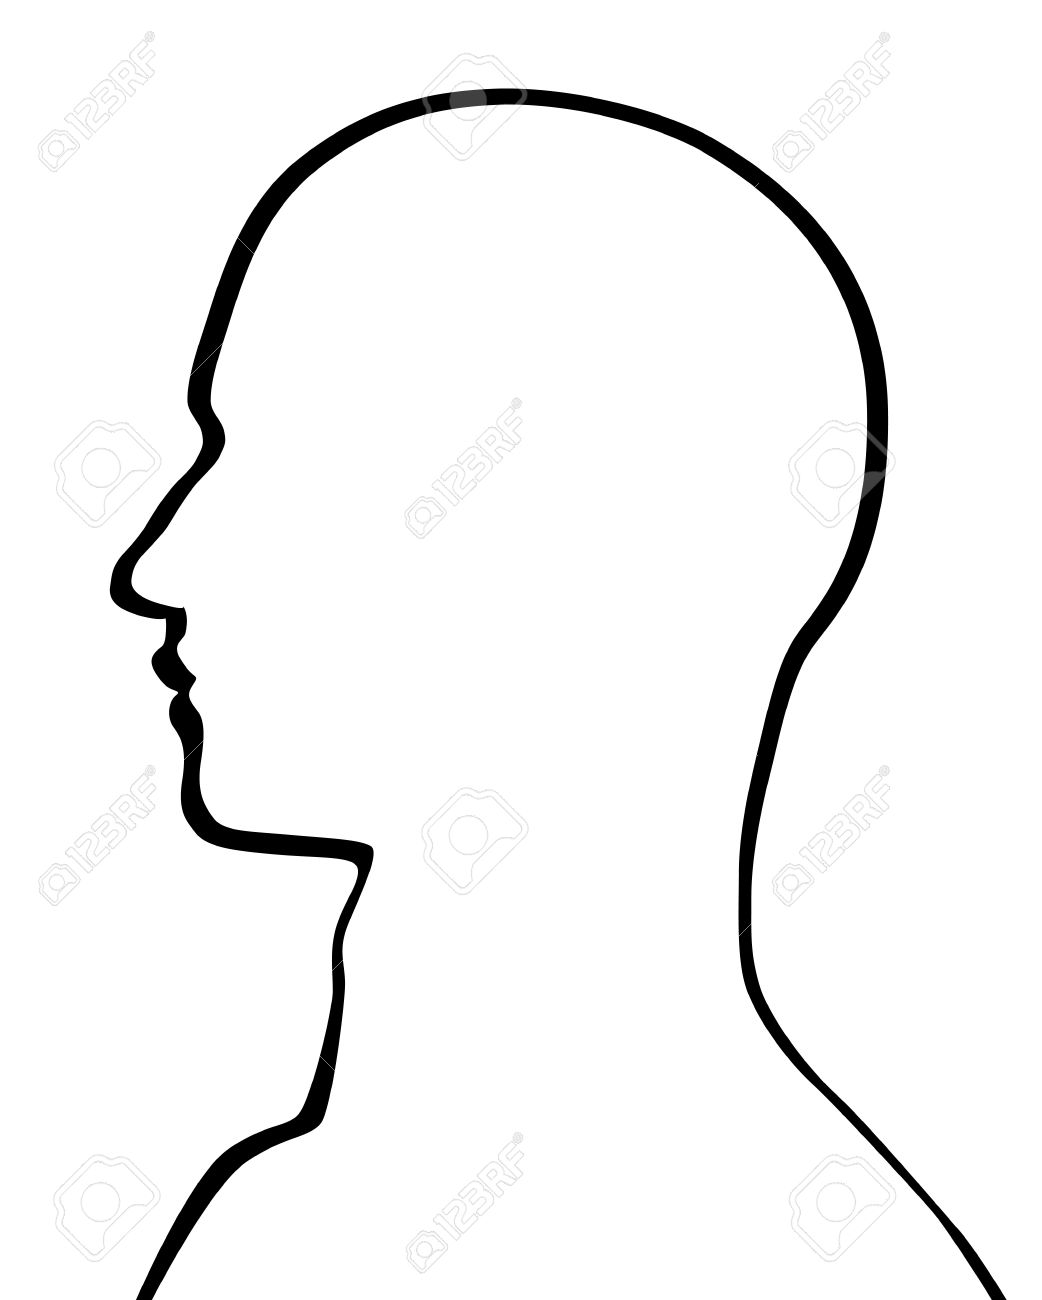 Human Head Silhouette Outline.